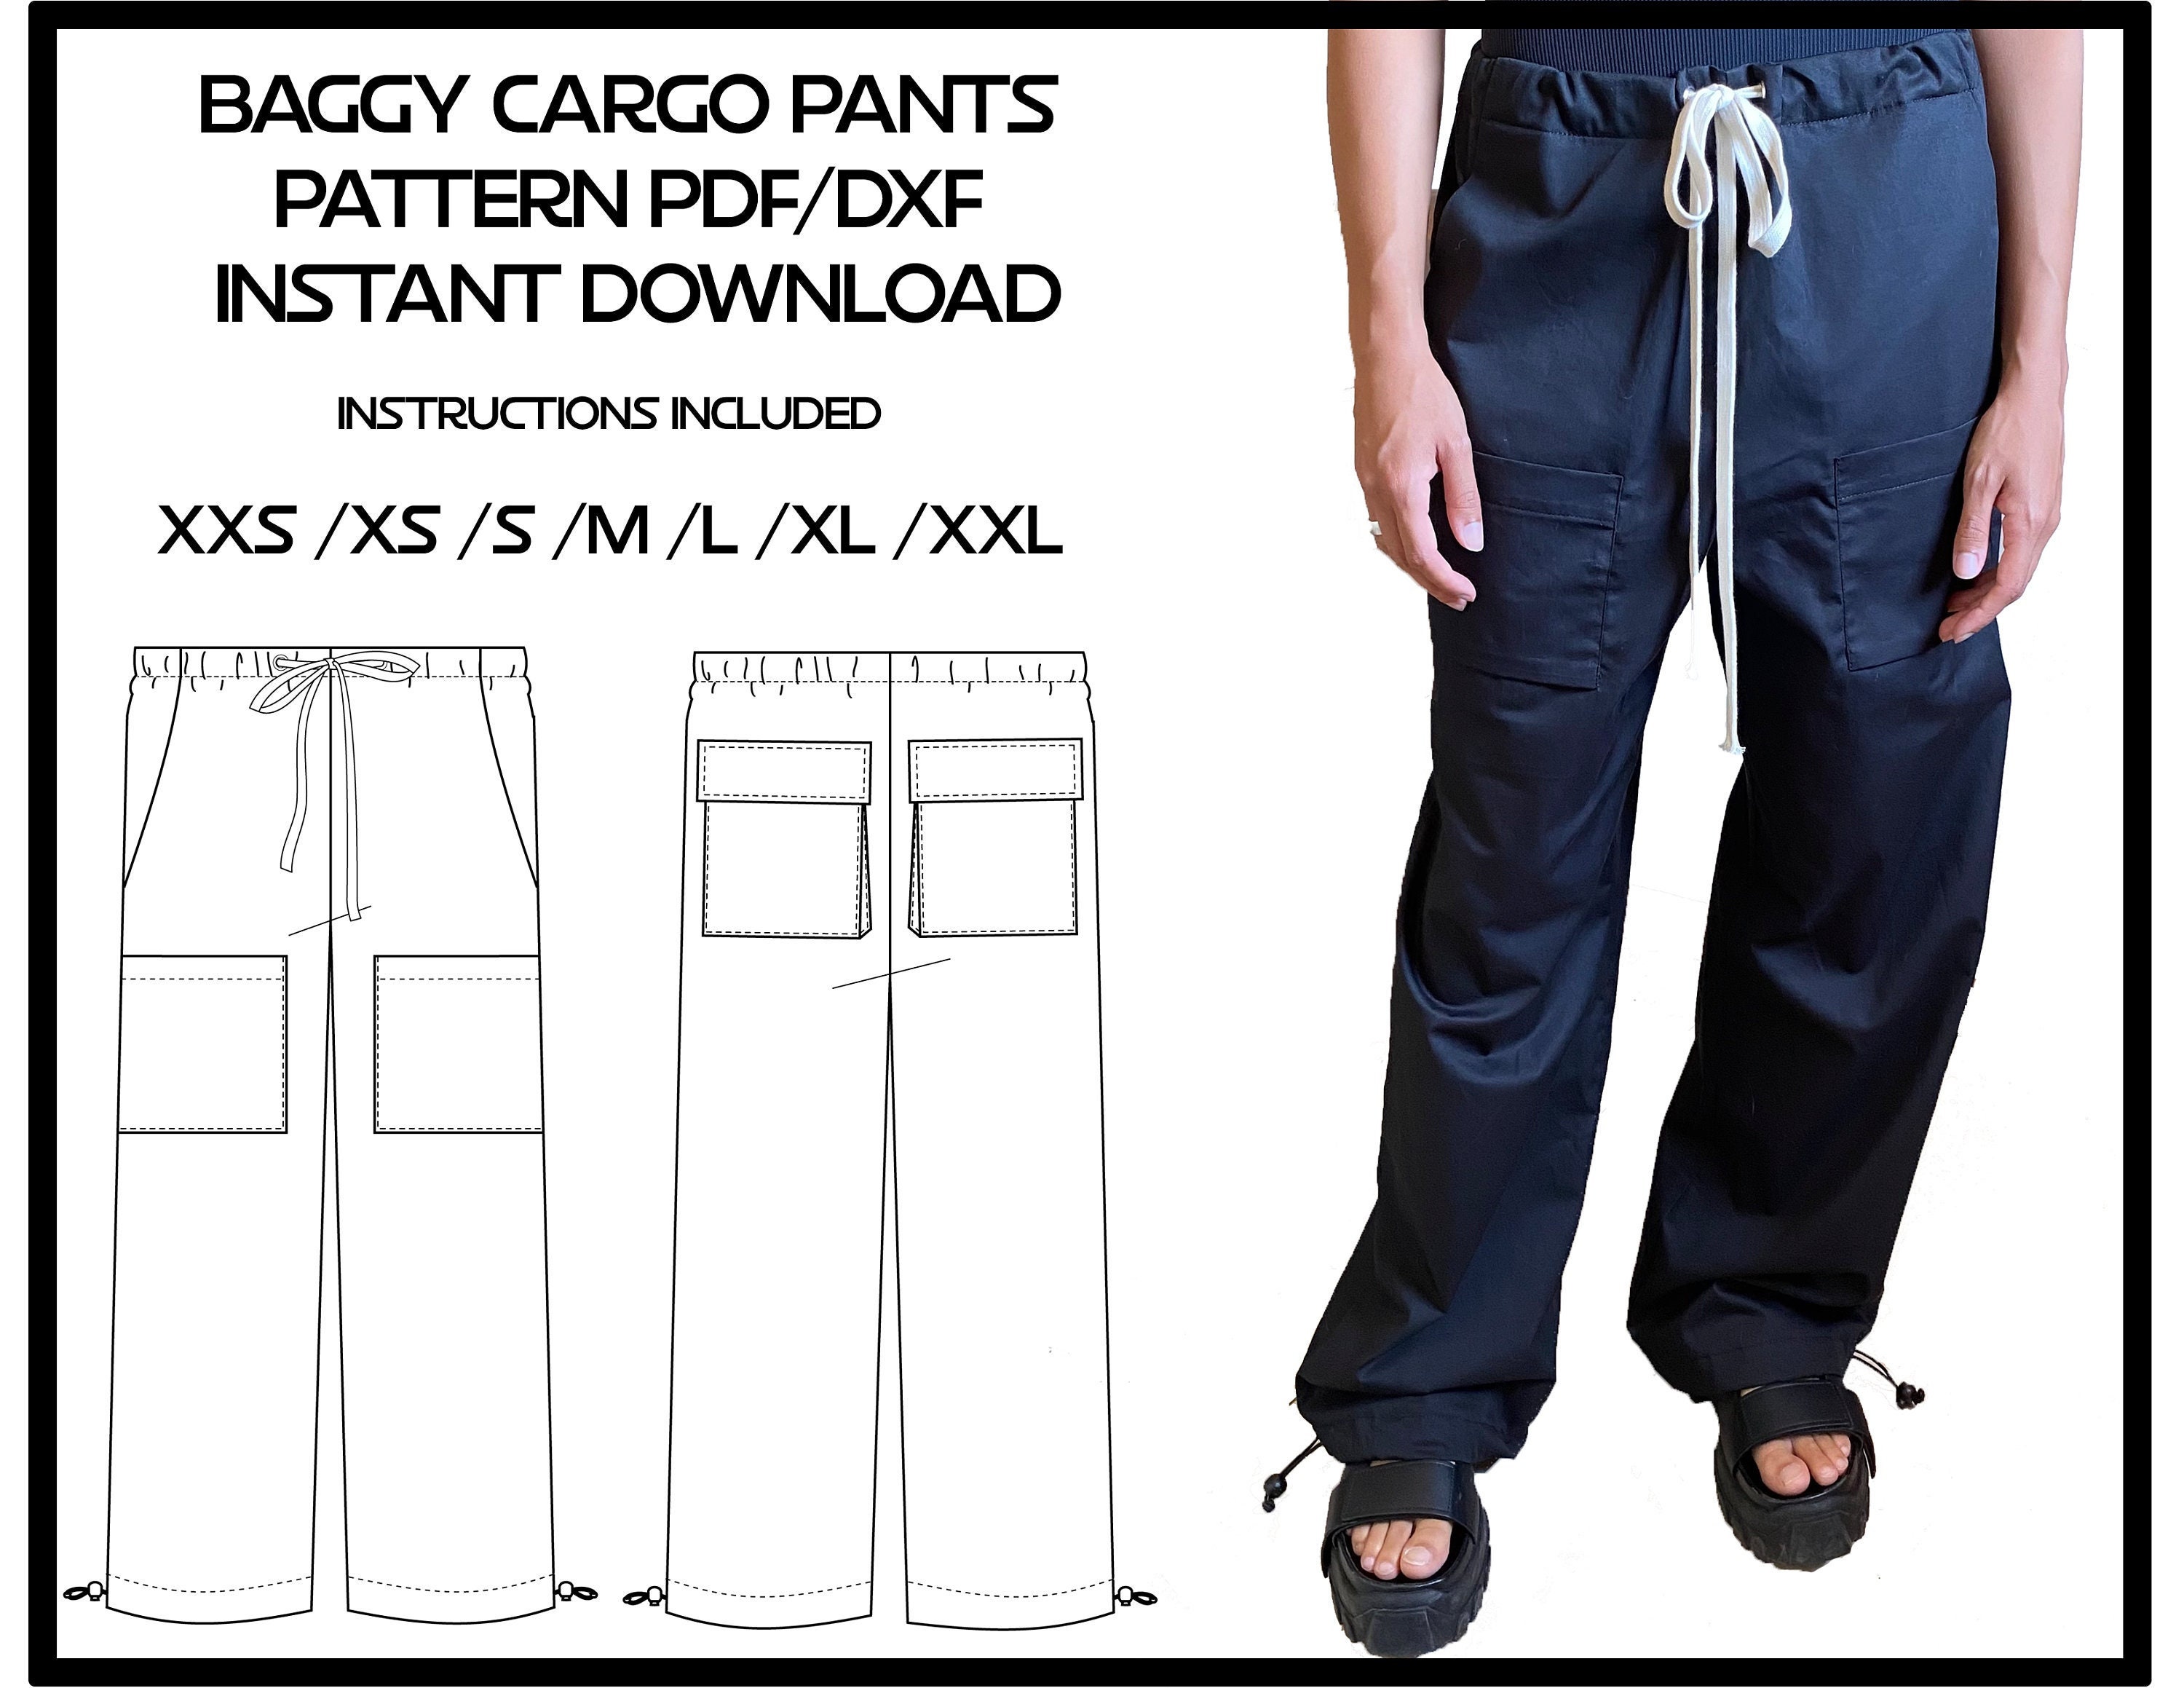 Buyr.com | Casual | PUMA Men's Clsx Cargo Pants, Black/Green/Blue, XXL